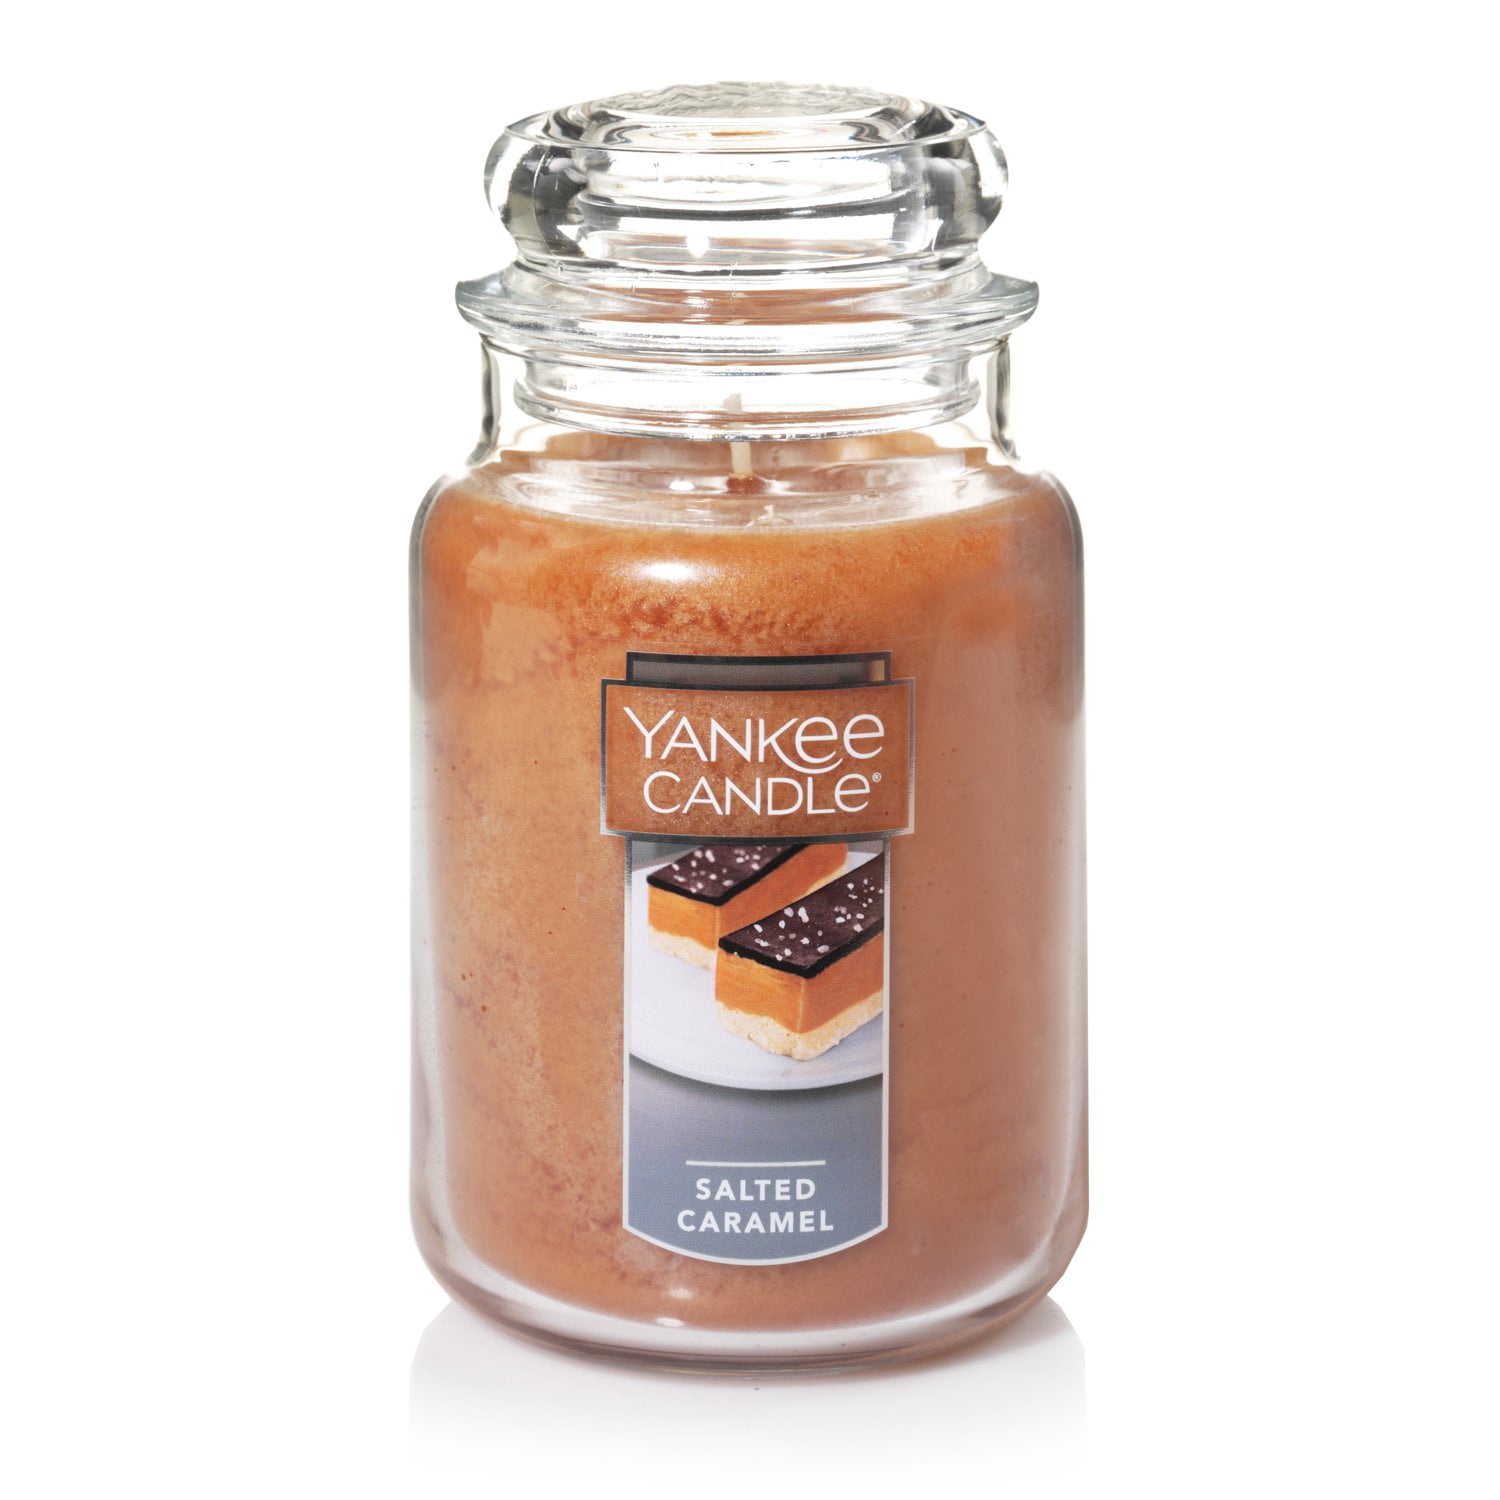 Yankee Candle Salted Caramel - 22 oz Original Large Jar Scented